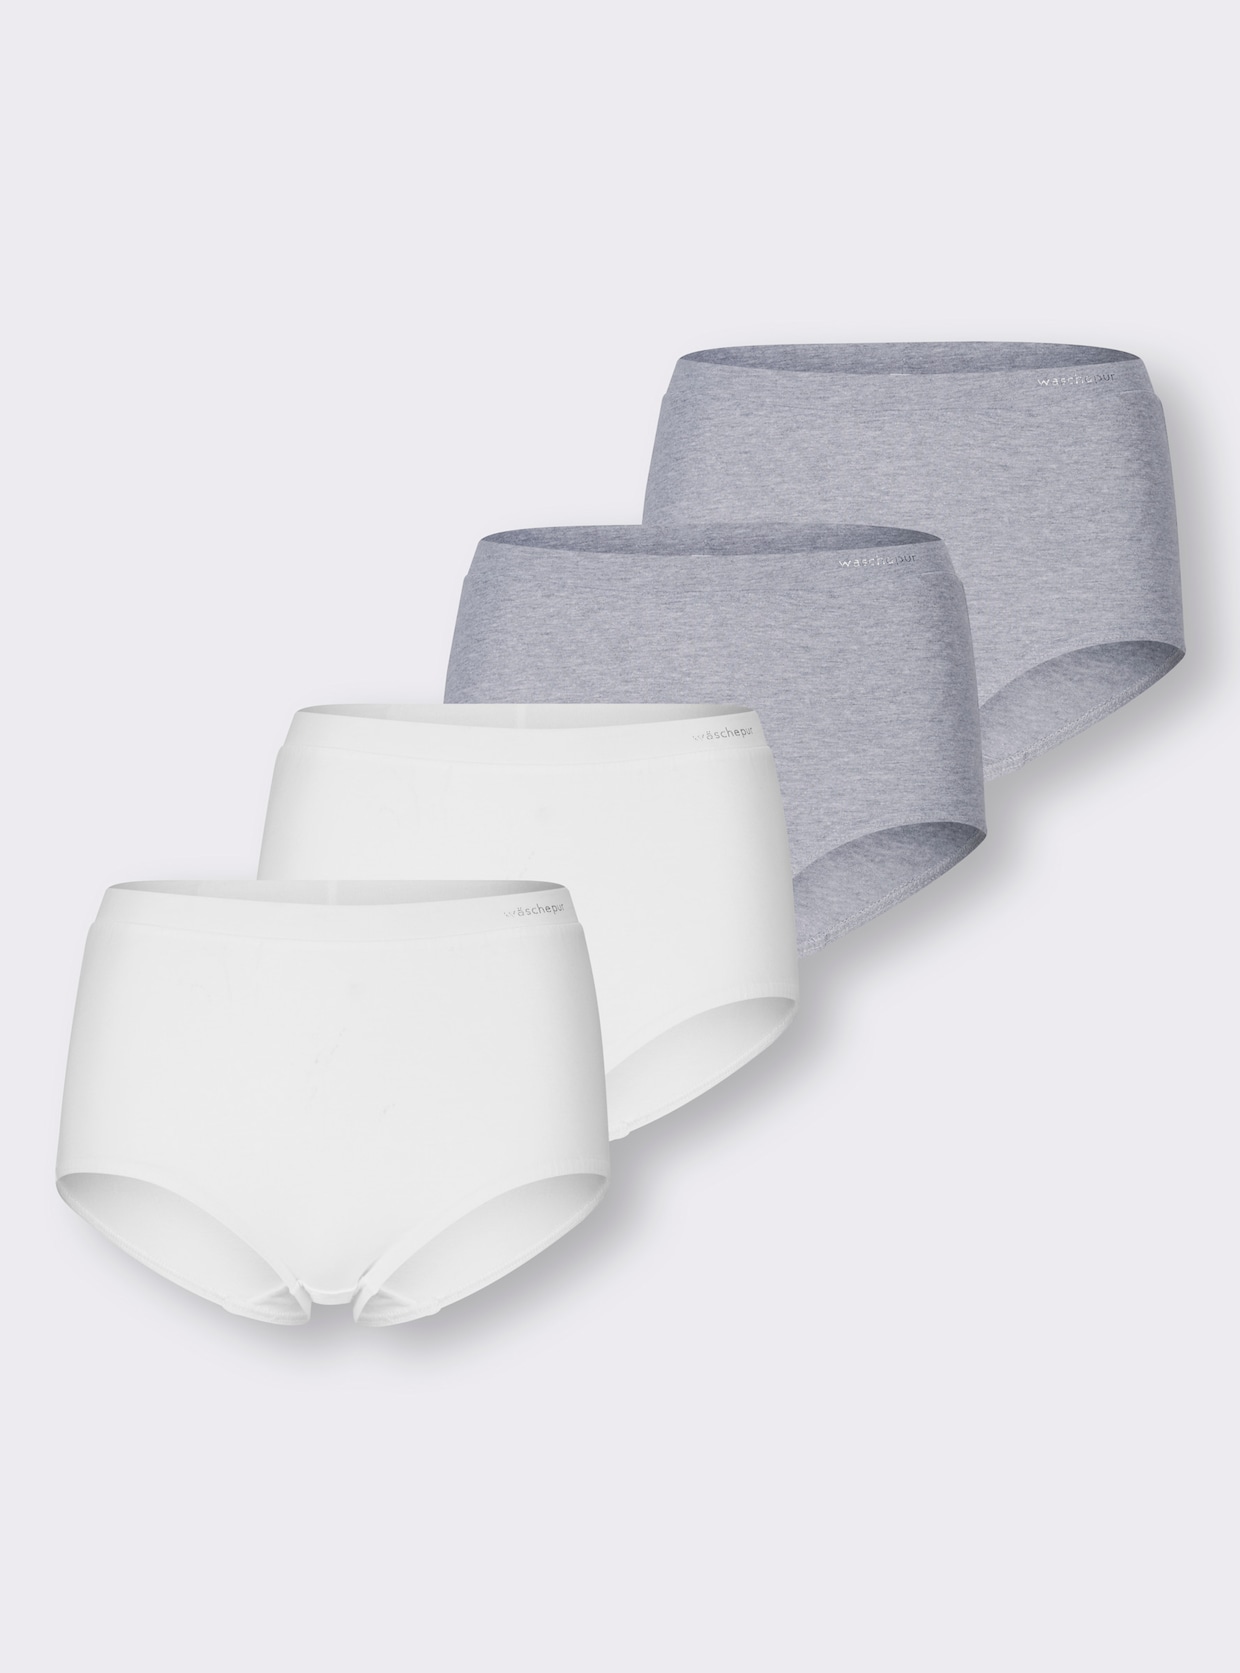 wäschepur Kalhotky s pasem - 2x bílá + 2x šedá-melír